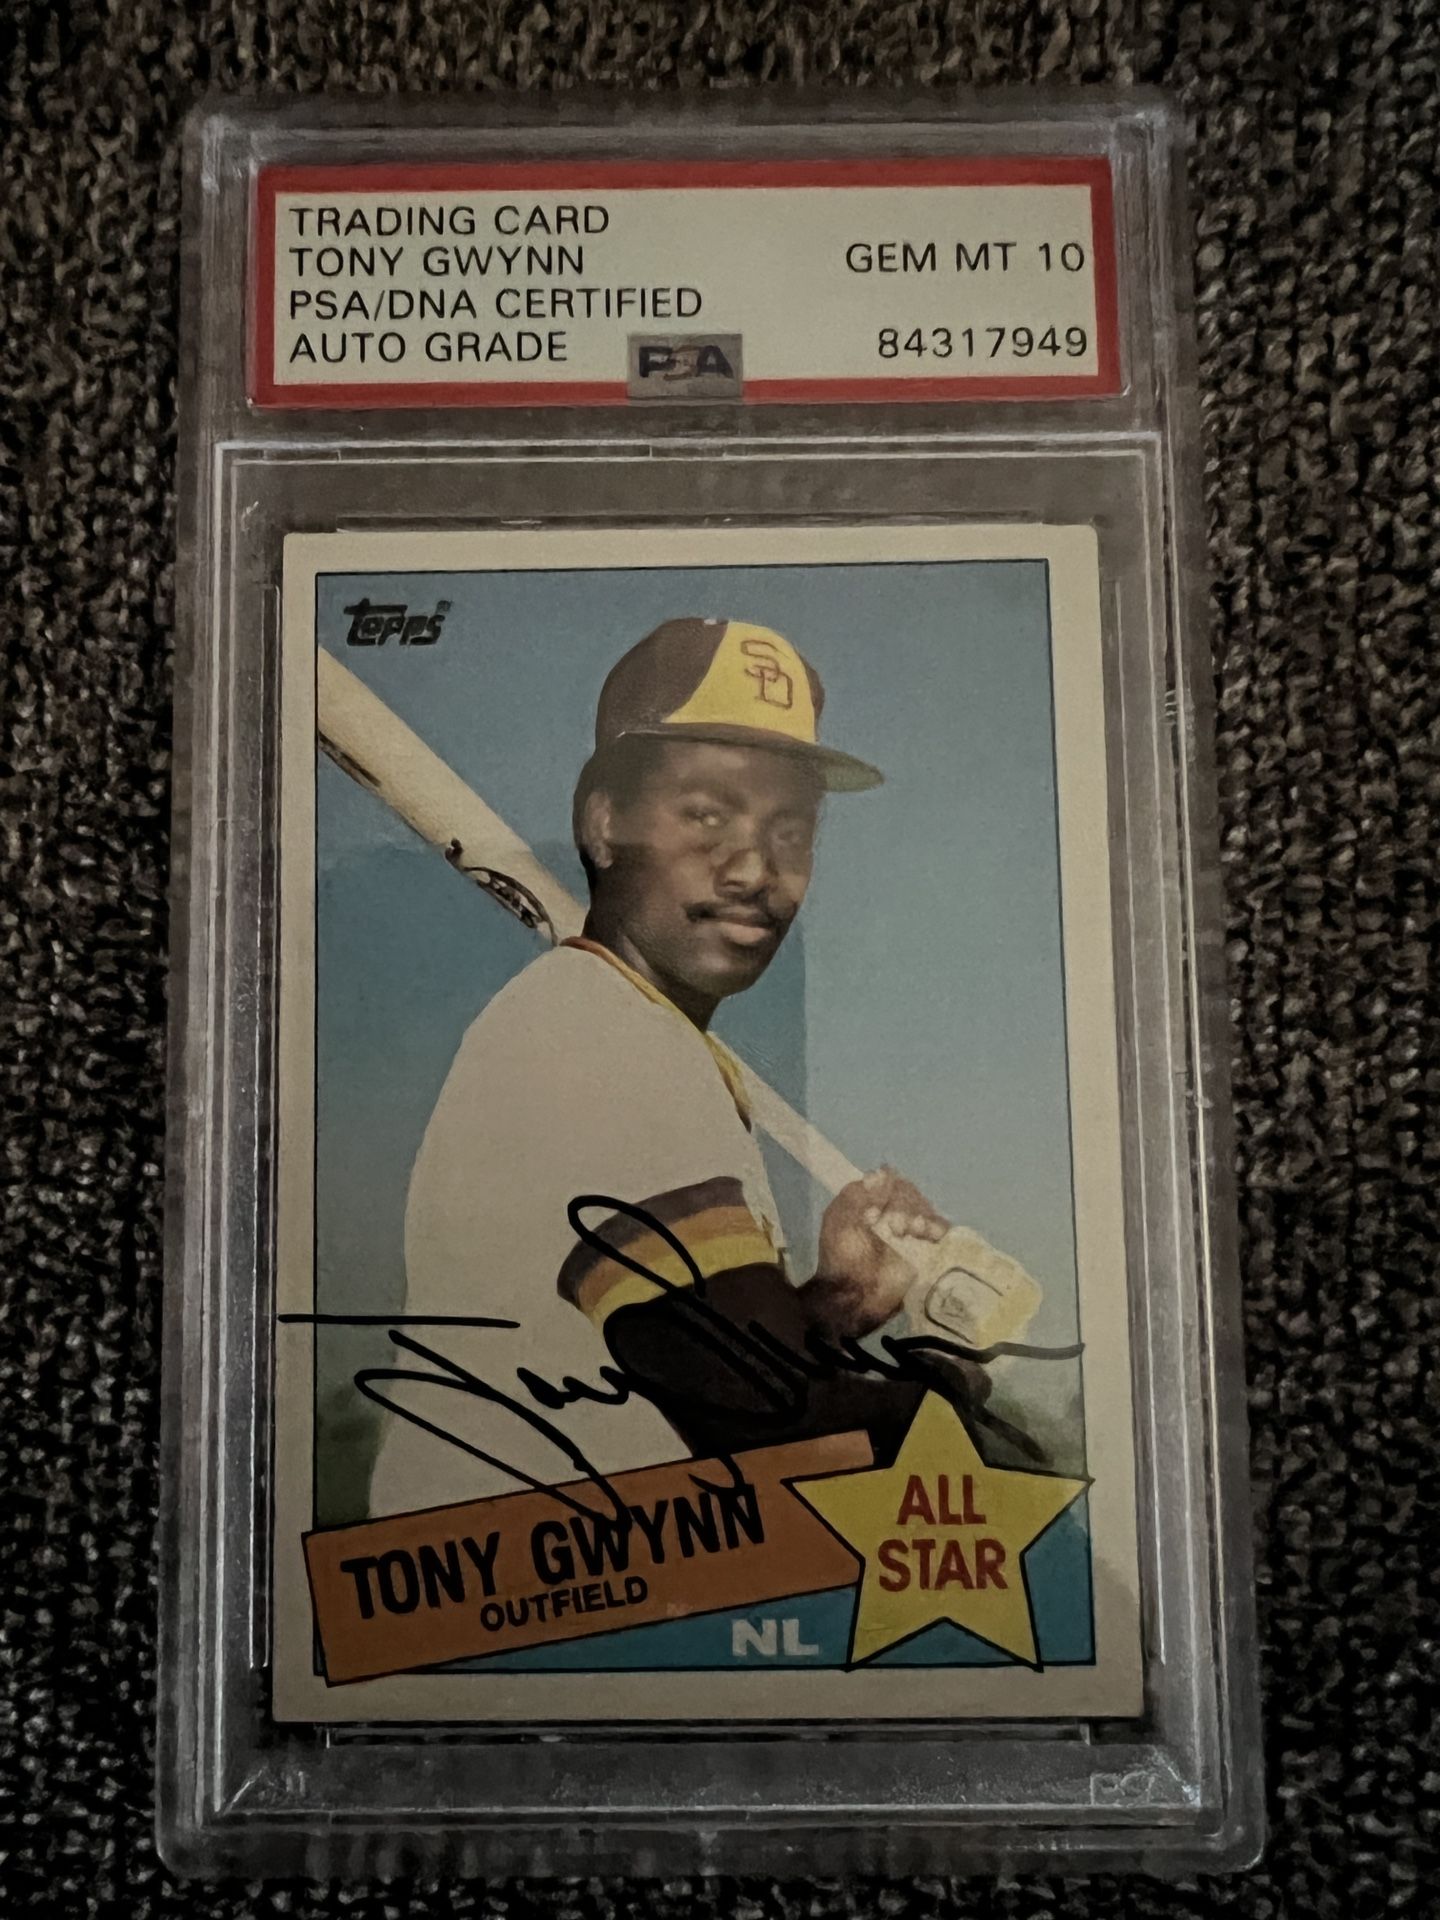 Tony Gwynn Signed Baseball Card Authorized Dealers